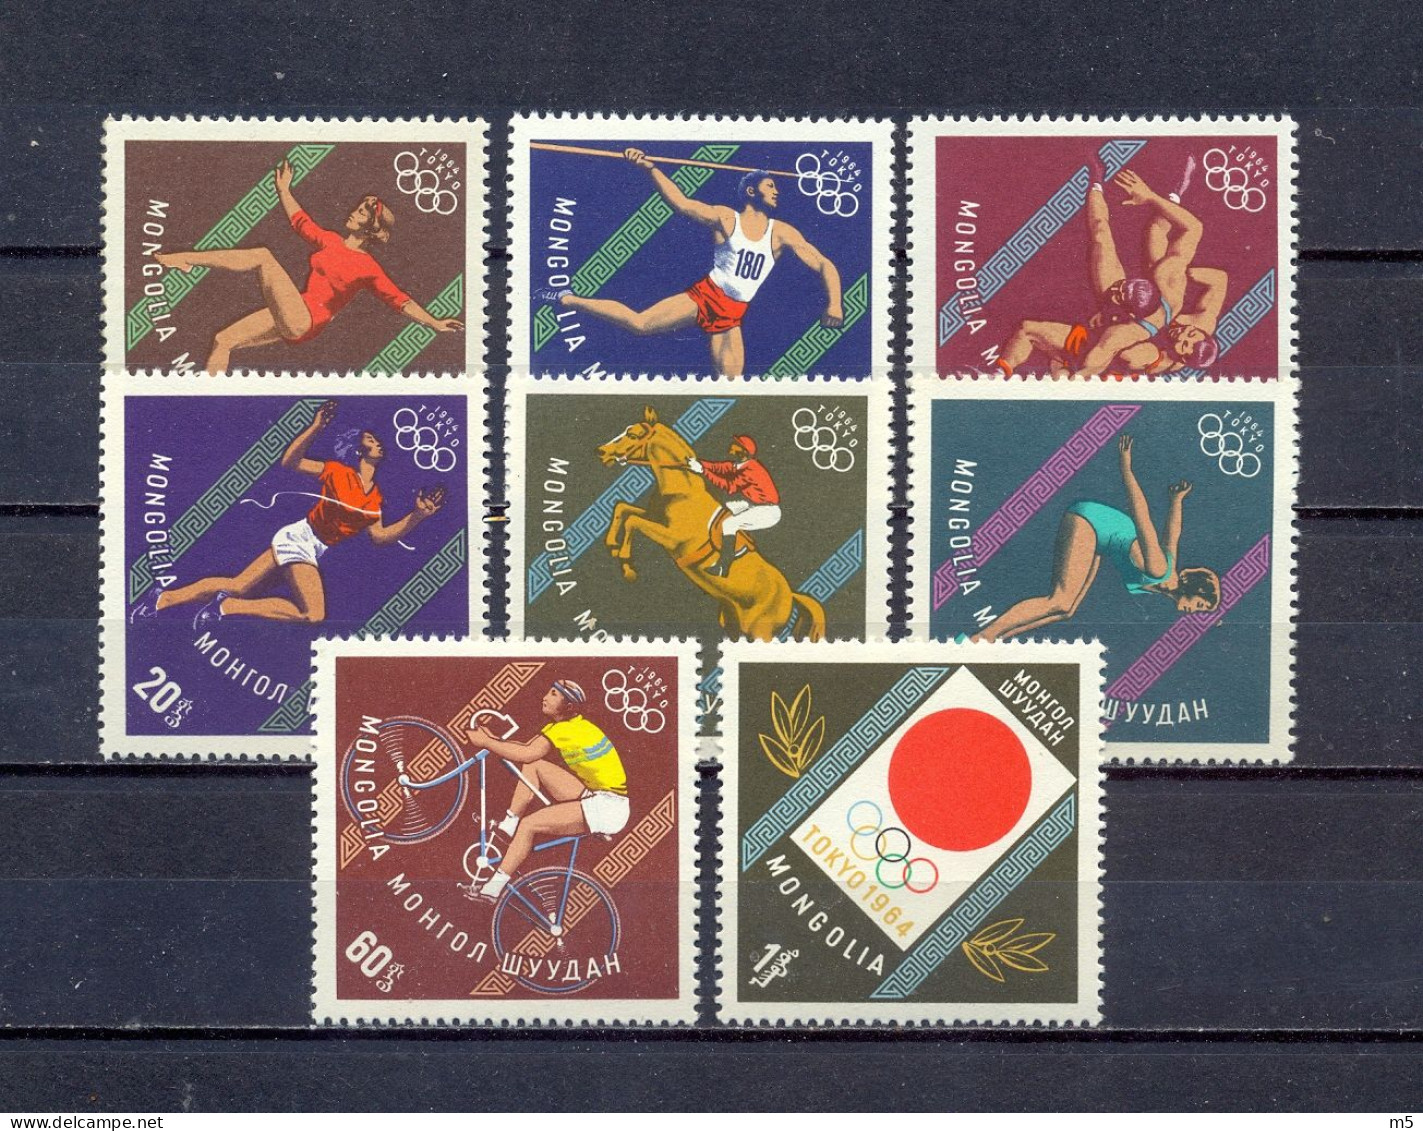 MONGOLIA - MNH - OLYMPIC GAMES TOKYO 1964. -  MI.NO.356/63 - CV = 3,5 € - Ete 1964: Tokyo